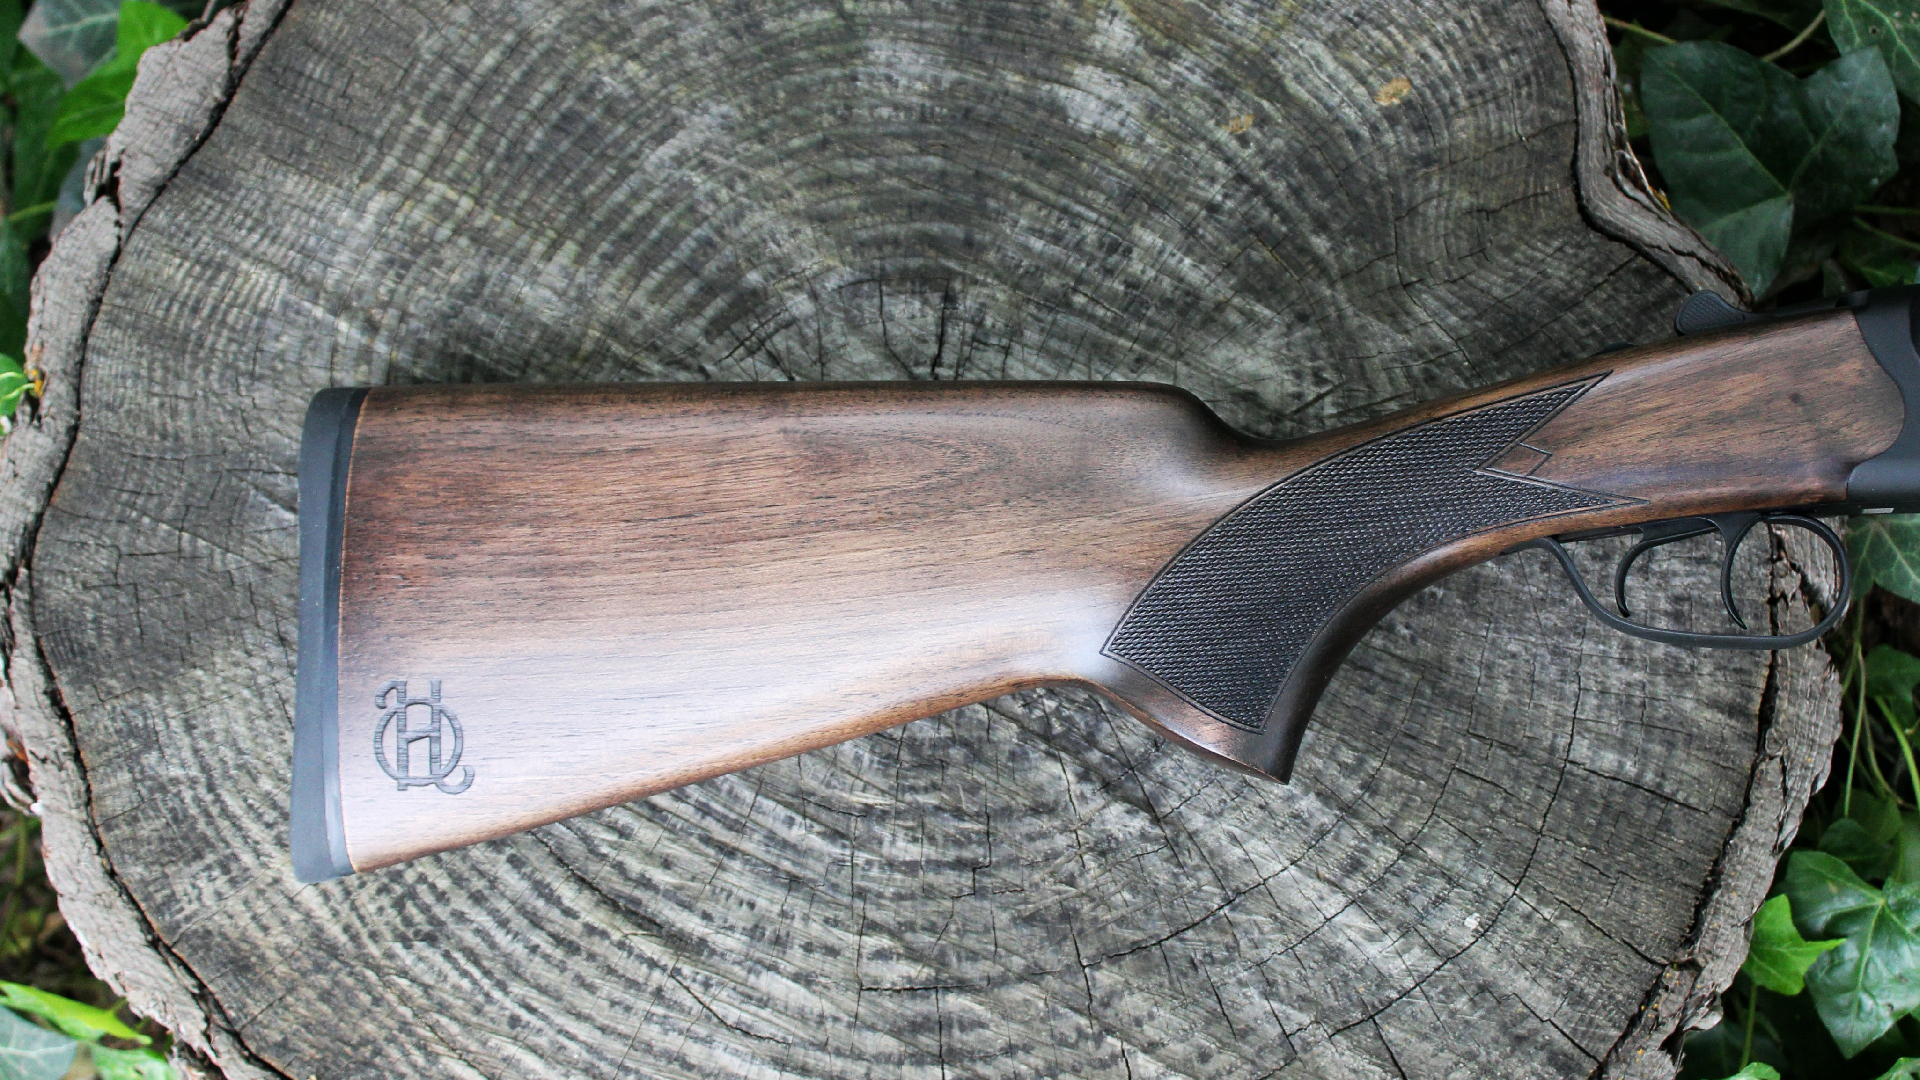 Heritage Badlander coach gun buttstock shown on log outdoors